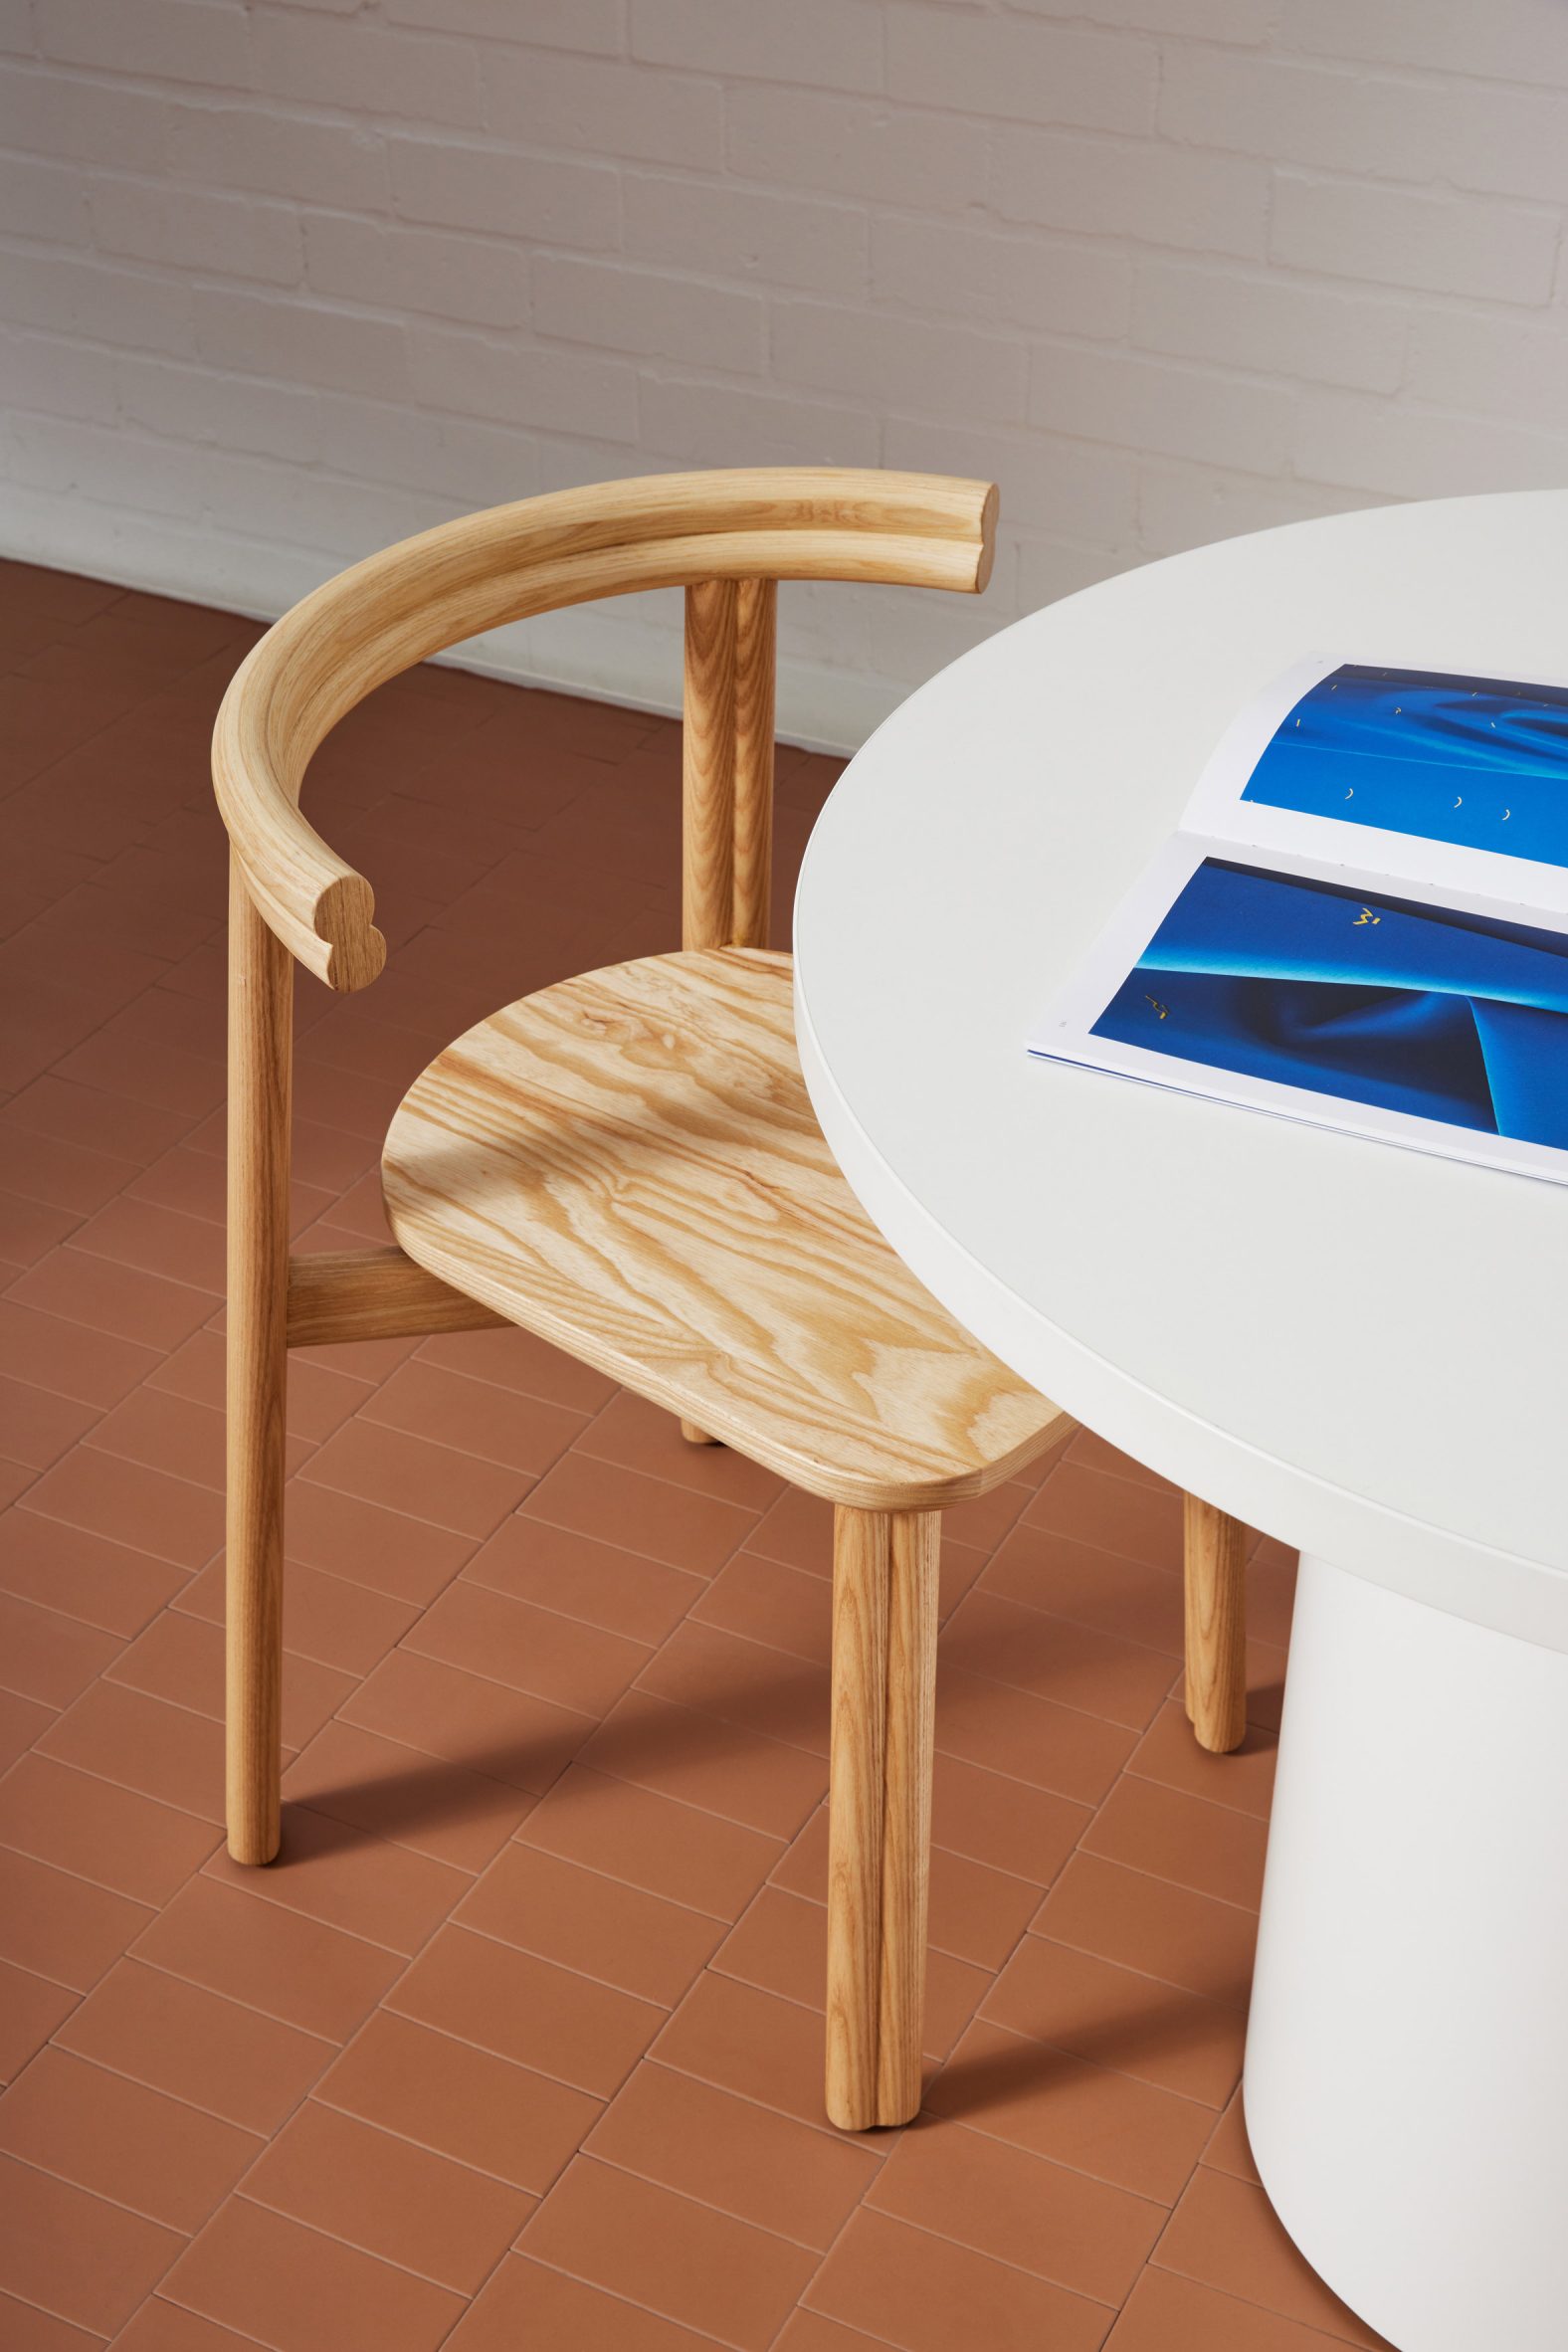 Twill chair by Gibson Karlo for Designbythem